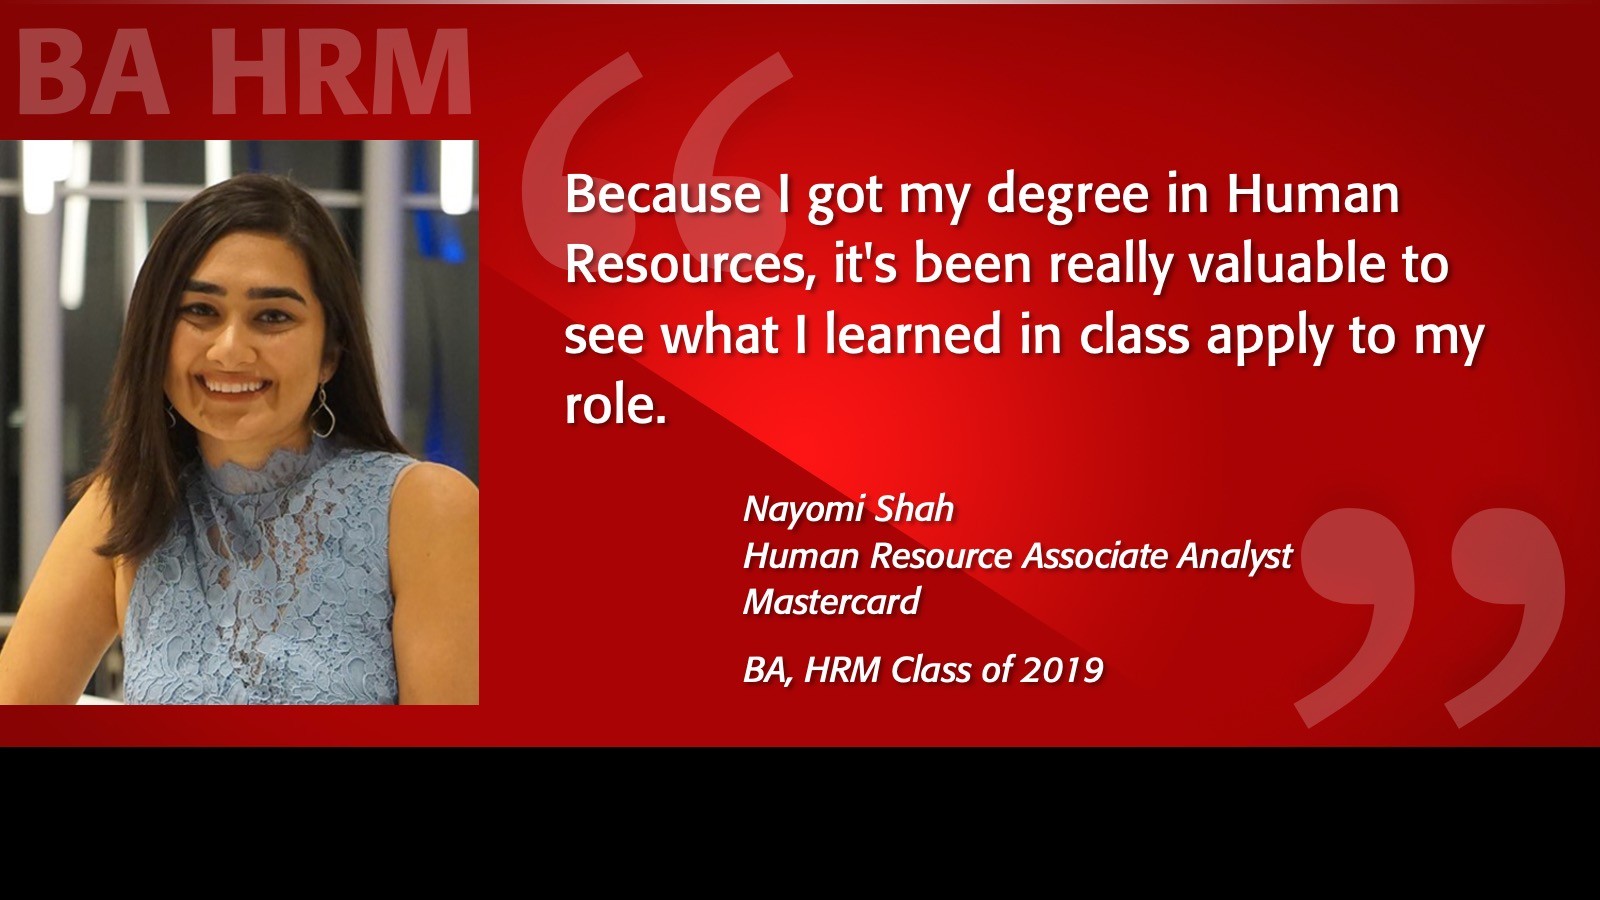 BA HRM Alumni Spotlight - Nayomi Shah